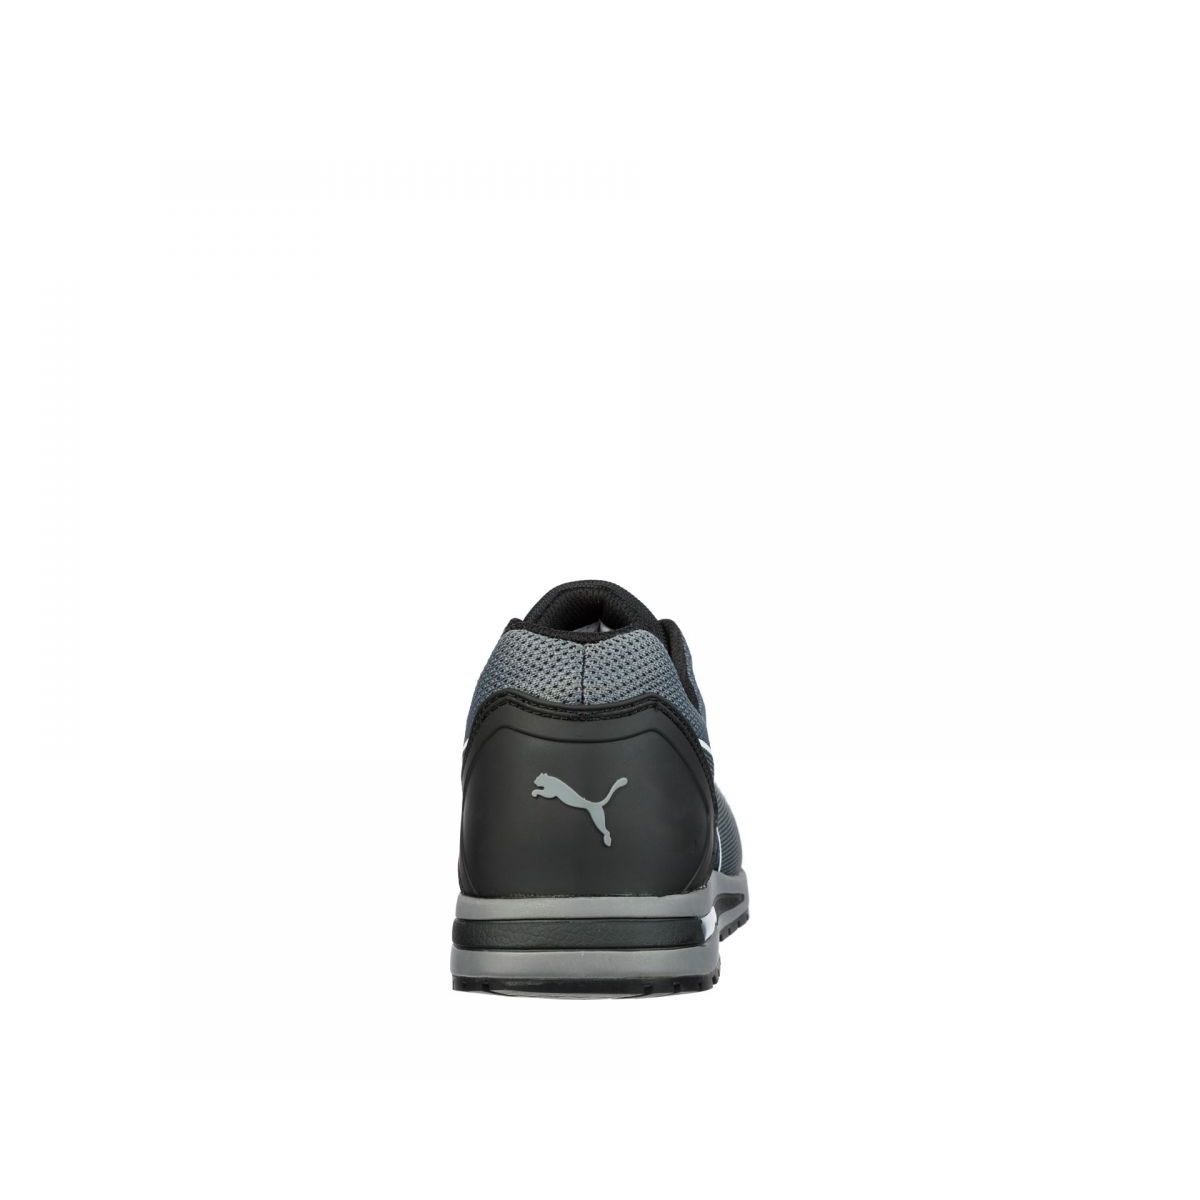 PUMA Safety Men's Elevate Knit Low Composite Toe ESD Work Shoe Black - 643165 ONE SIZE BLACK - BLACK, 10 Wide